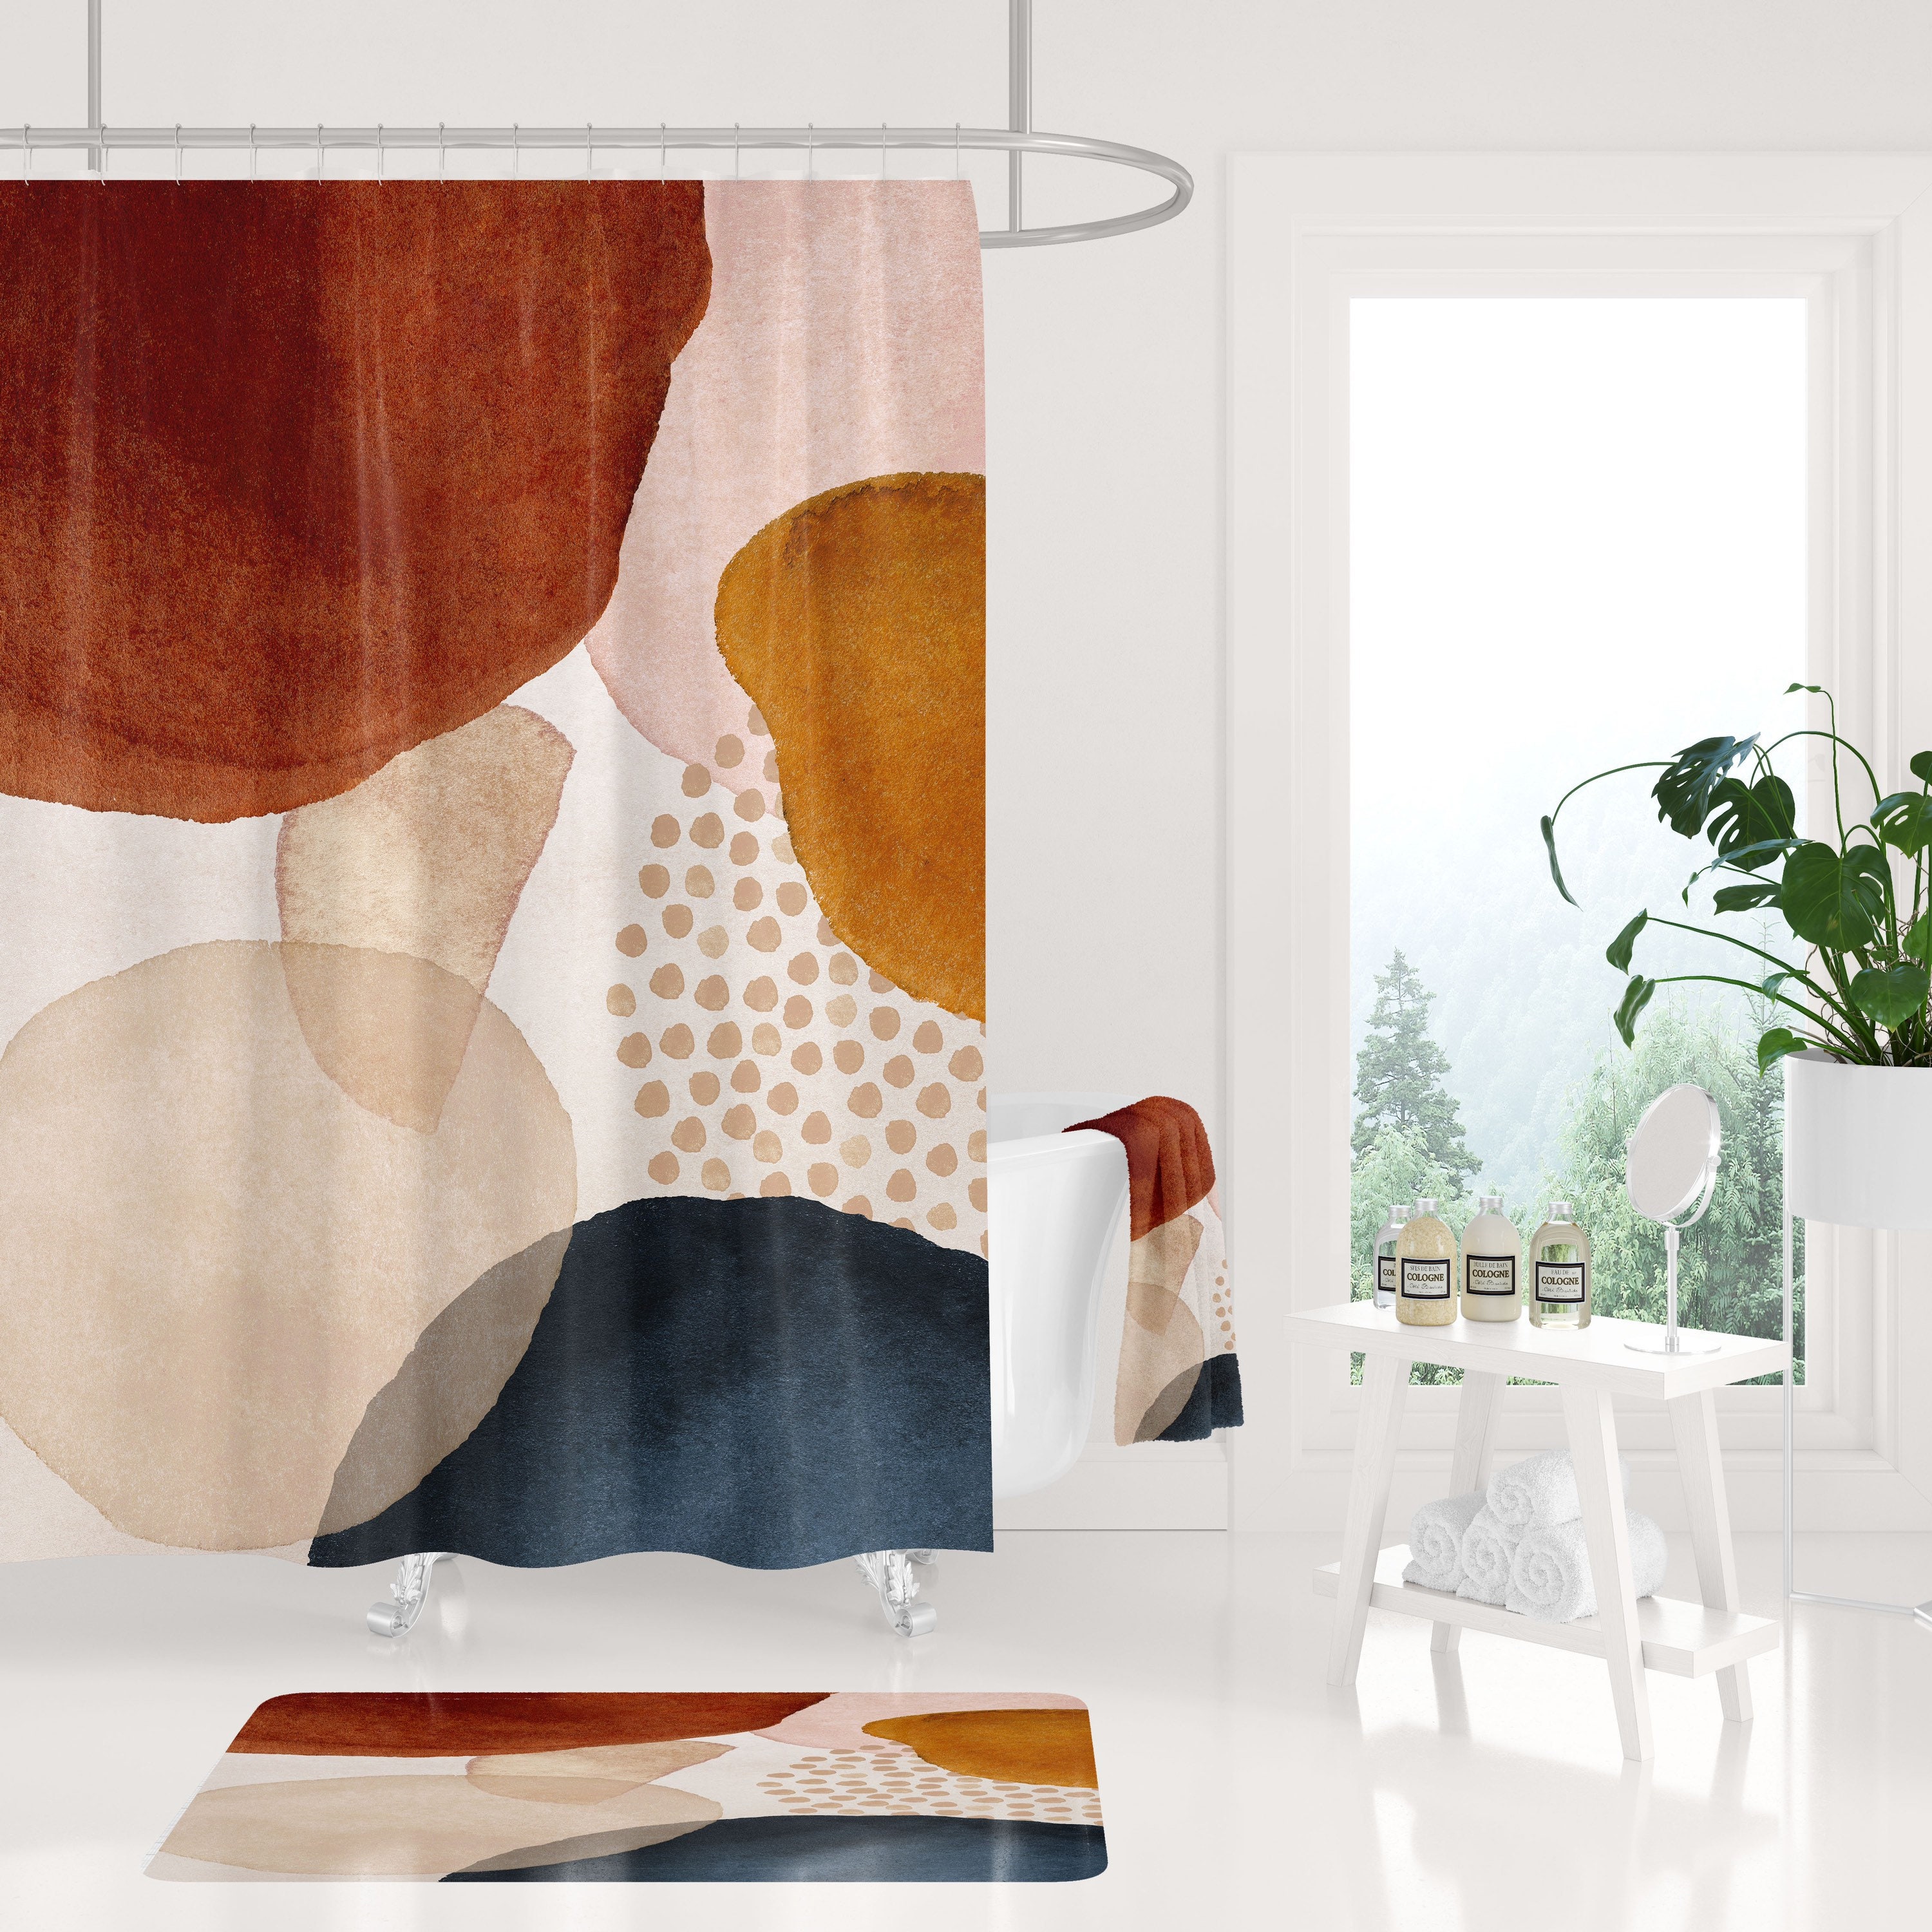 Louis Vuitton Dark Gray Monogram Pattern Shower Curtain and Mat